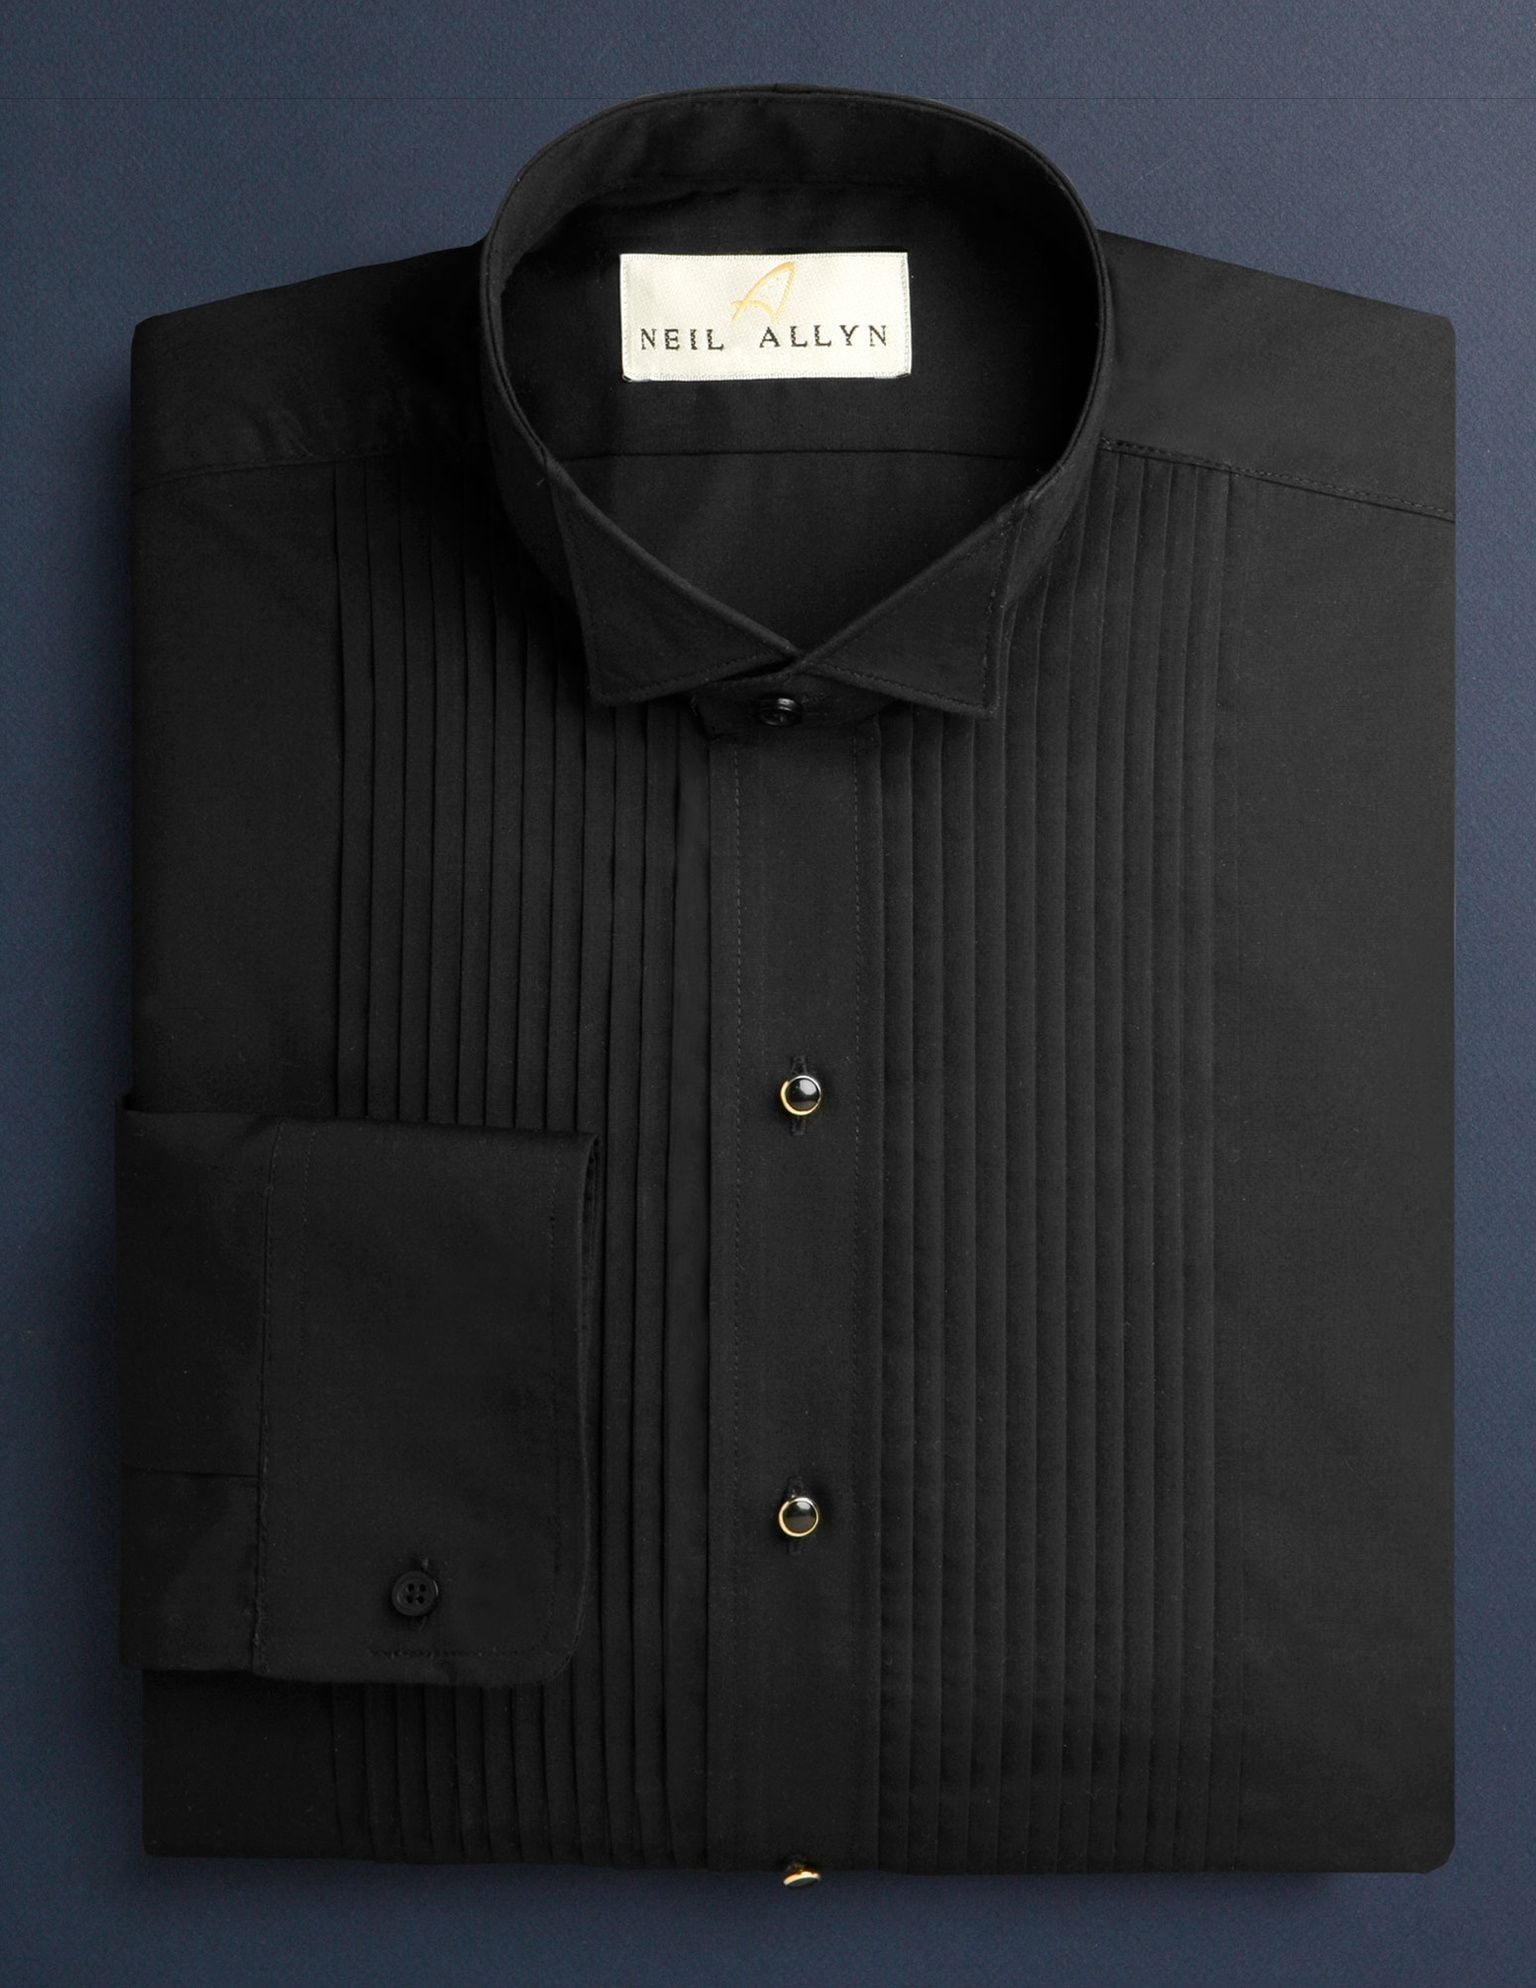 New Men's Black Neil Allyn Tuxedo Jacket with Satin Lapels Big & Tall Sizes 